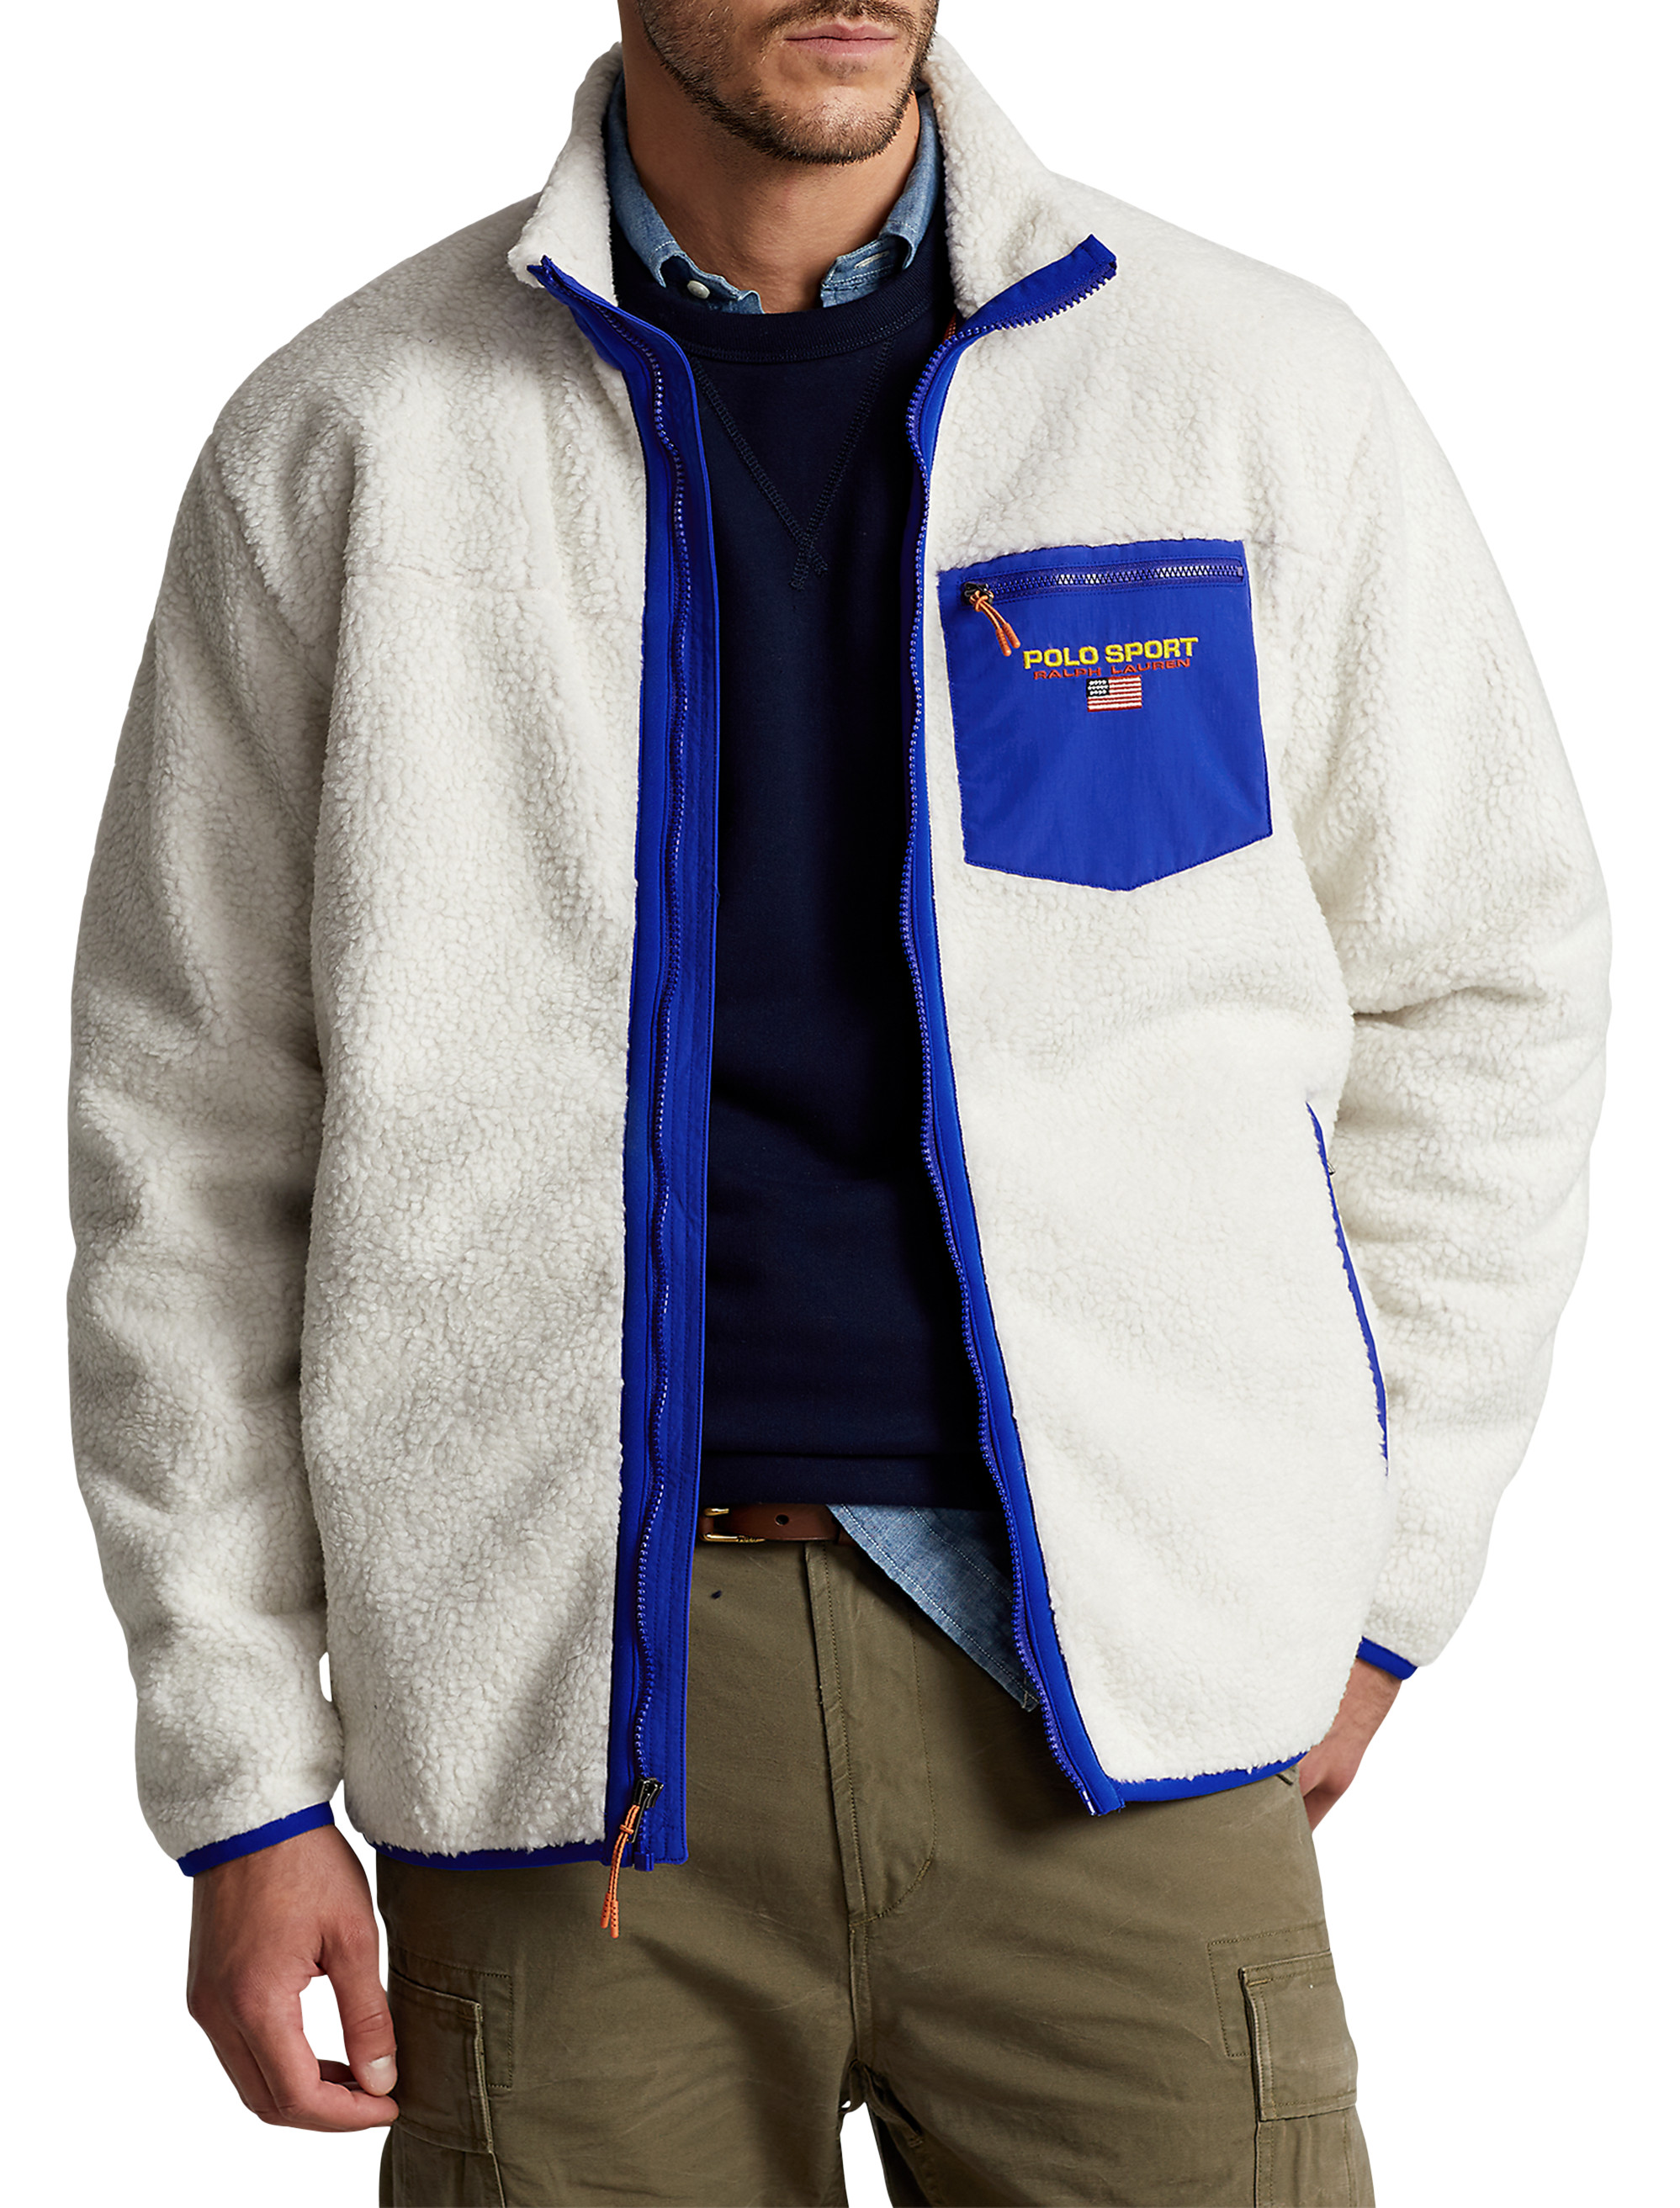 Big + Tall, Polo Ralph Lauren Polo Sport Fleece Jacket